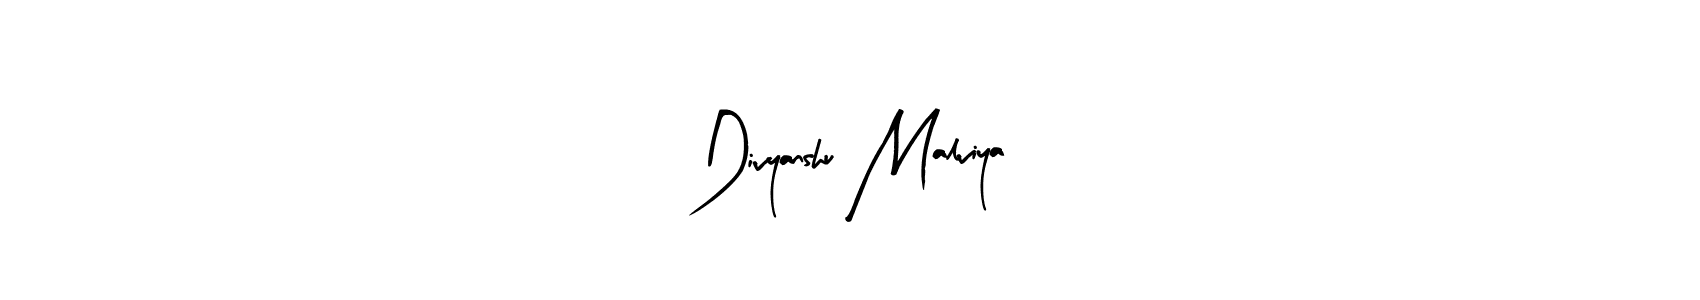 Make a beautiful signature design for name Divyanshu Malviya. Use this online signature maker to create a handwritten signature for free. Divyanshu Malviya signature style 8 images and pictures png